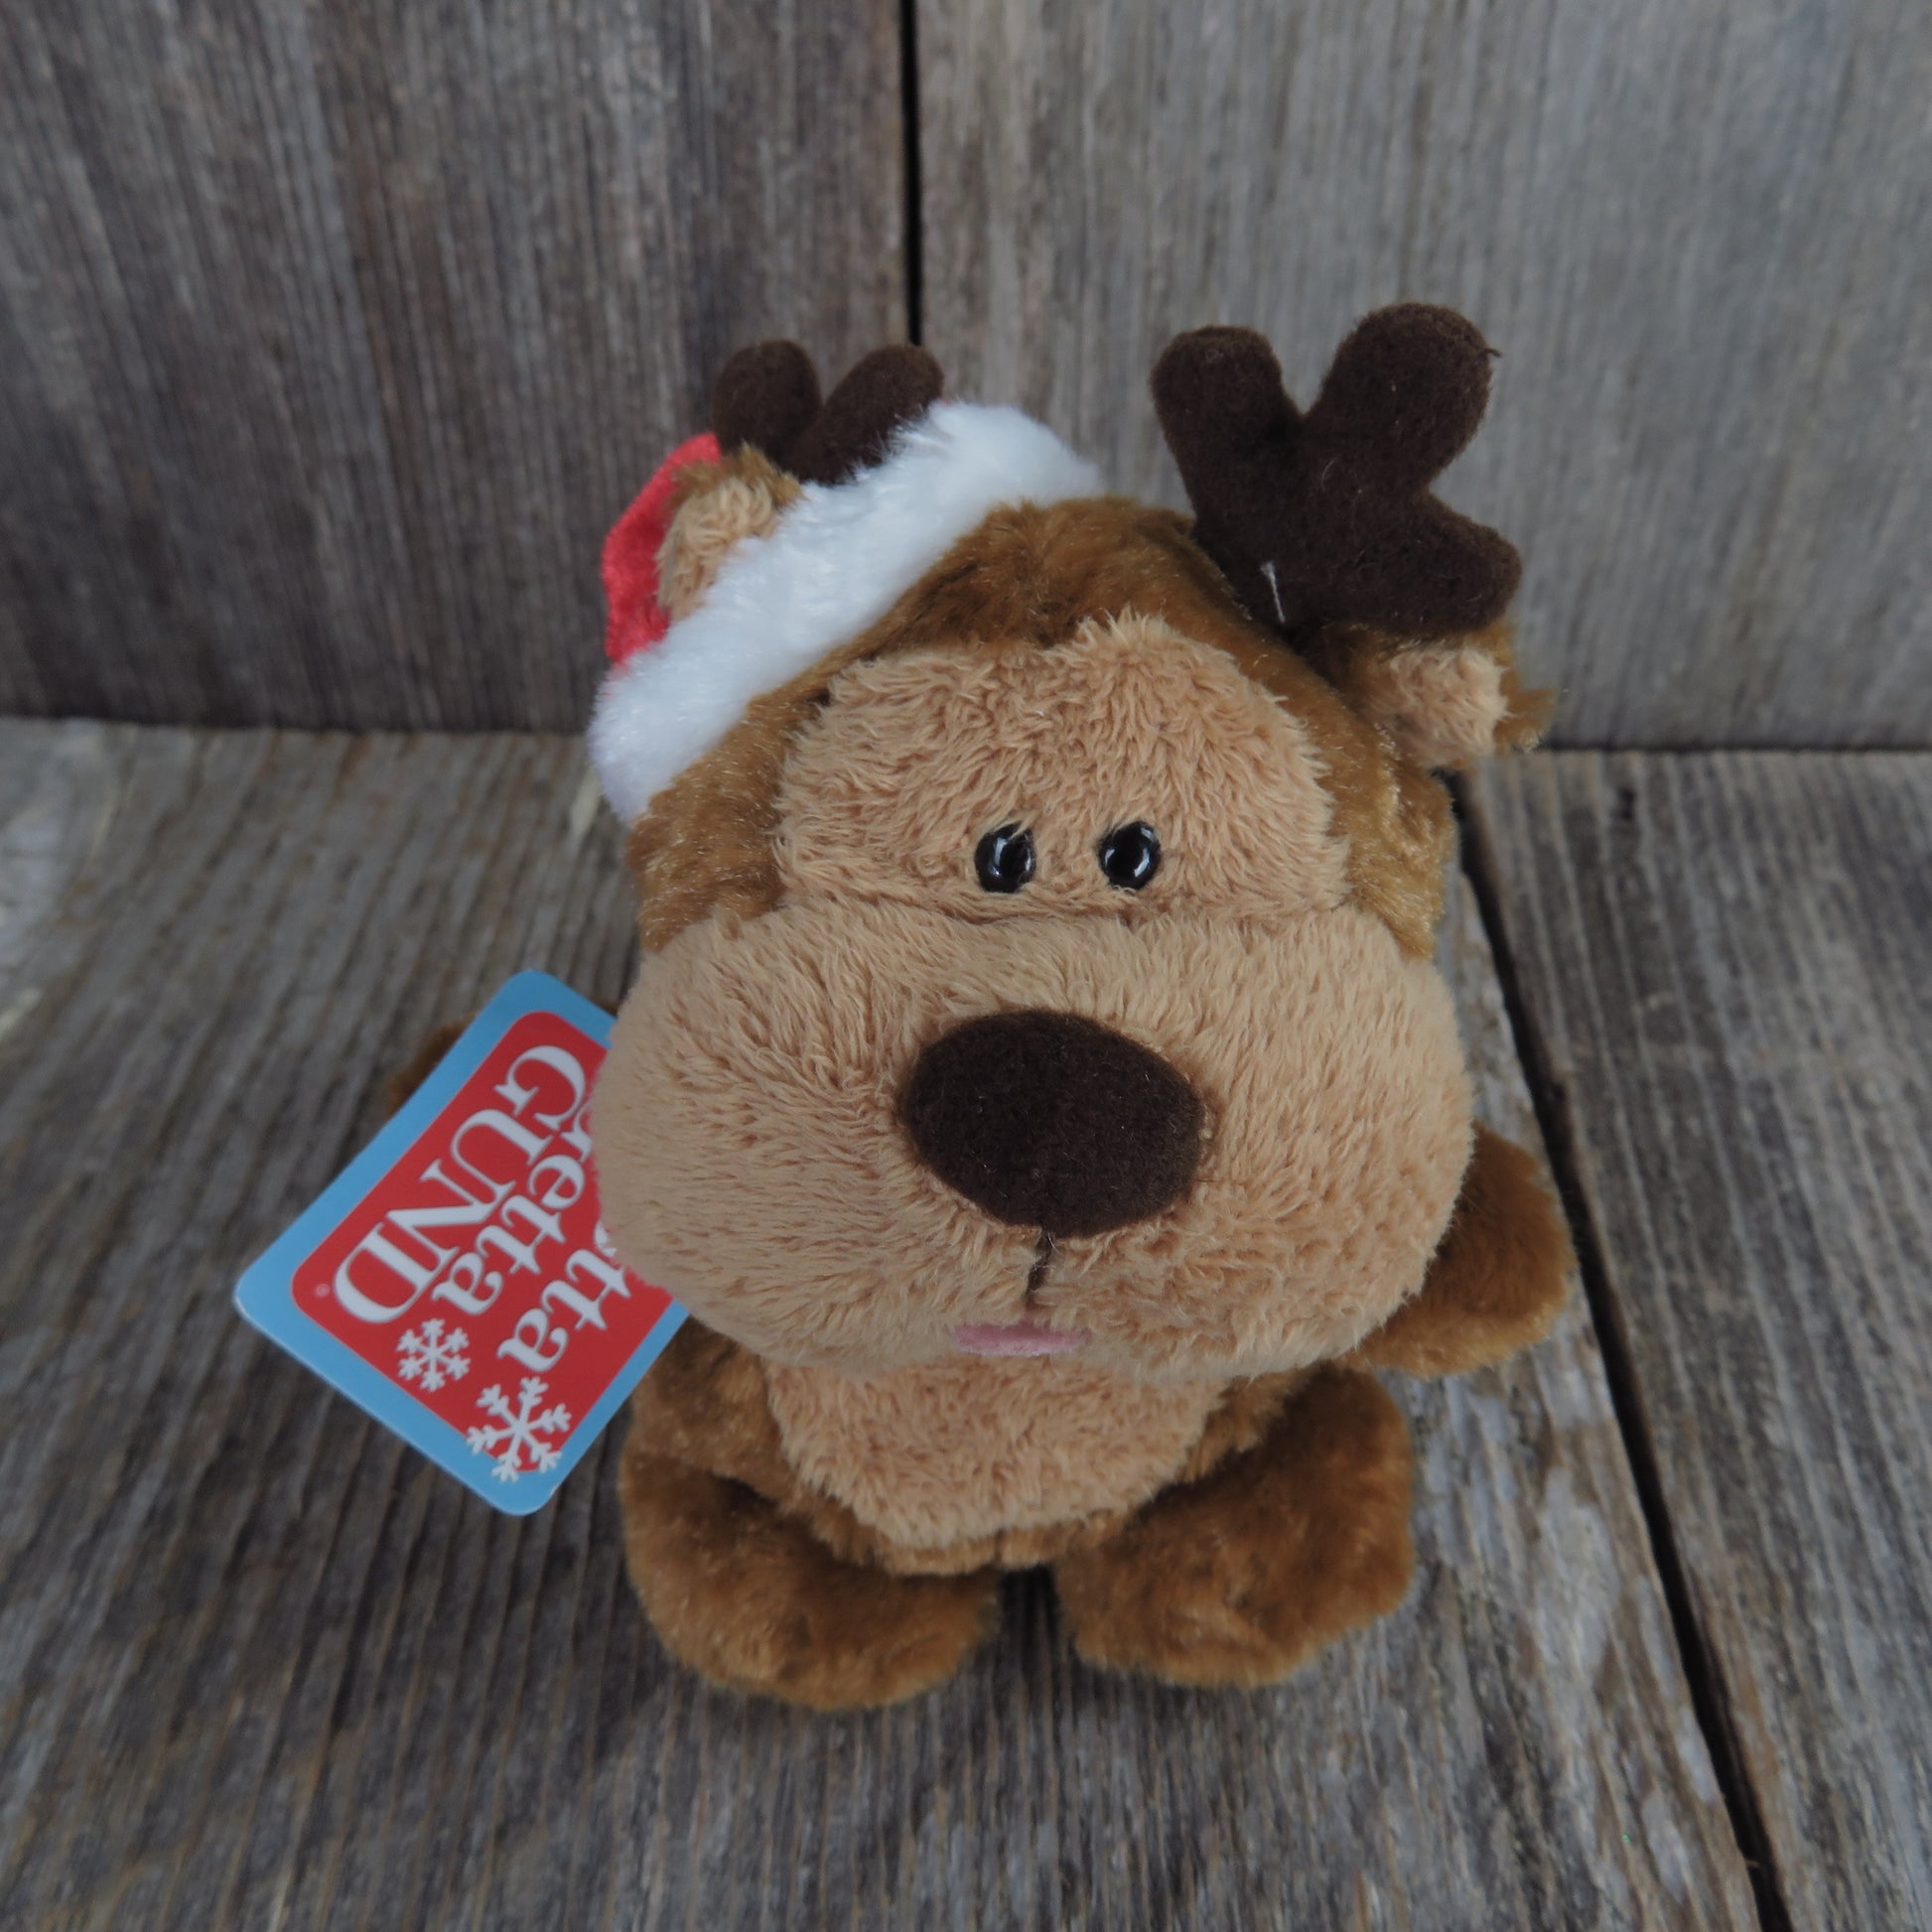 Moose Plush Gund Igloo Crew Christmas Brown Antlers Red Mini Stuffed Animal Doll Toy Holiday Santa Hat - At Grandma's Table